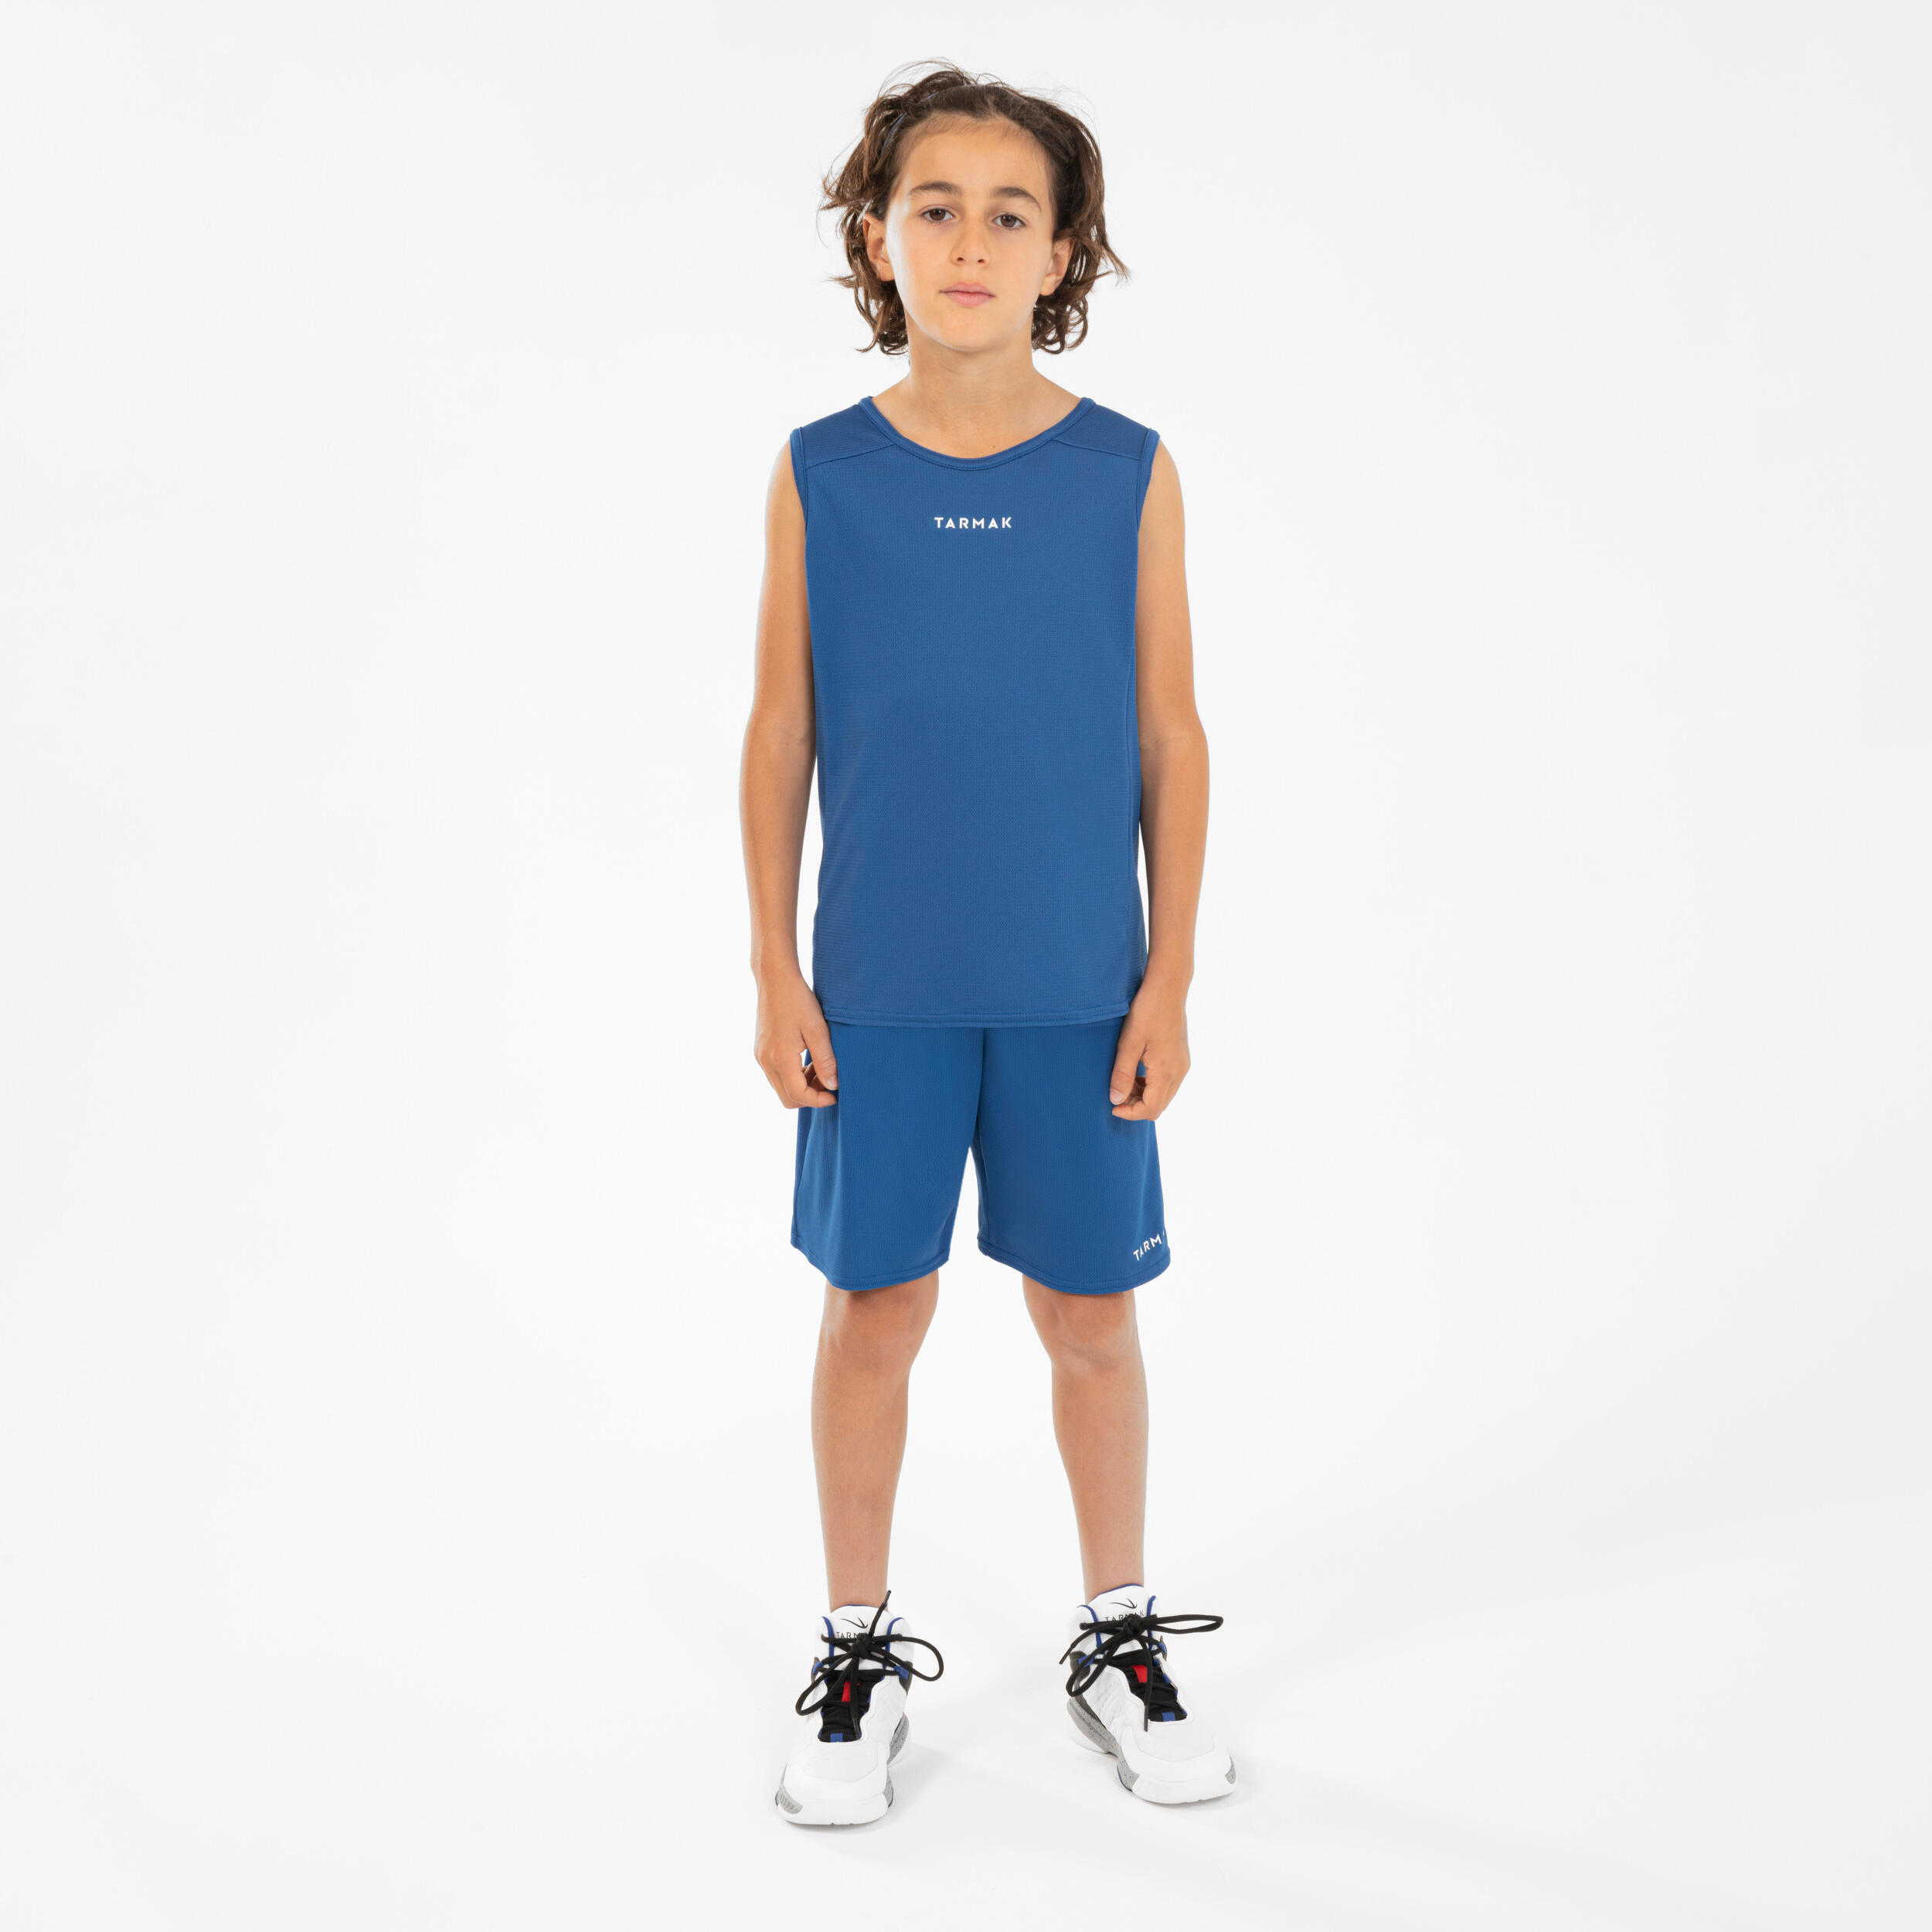 Kids' Sleeveless Basketball Jersey T100 - Blue 4/4